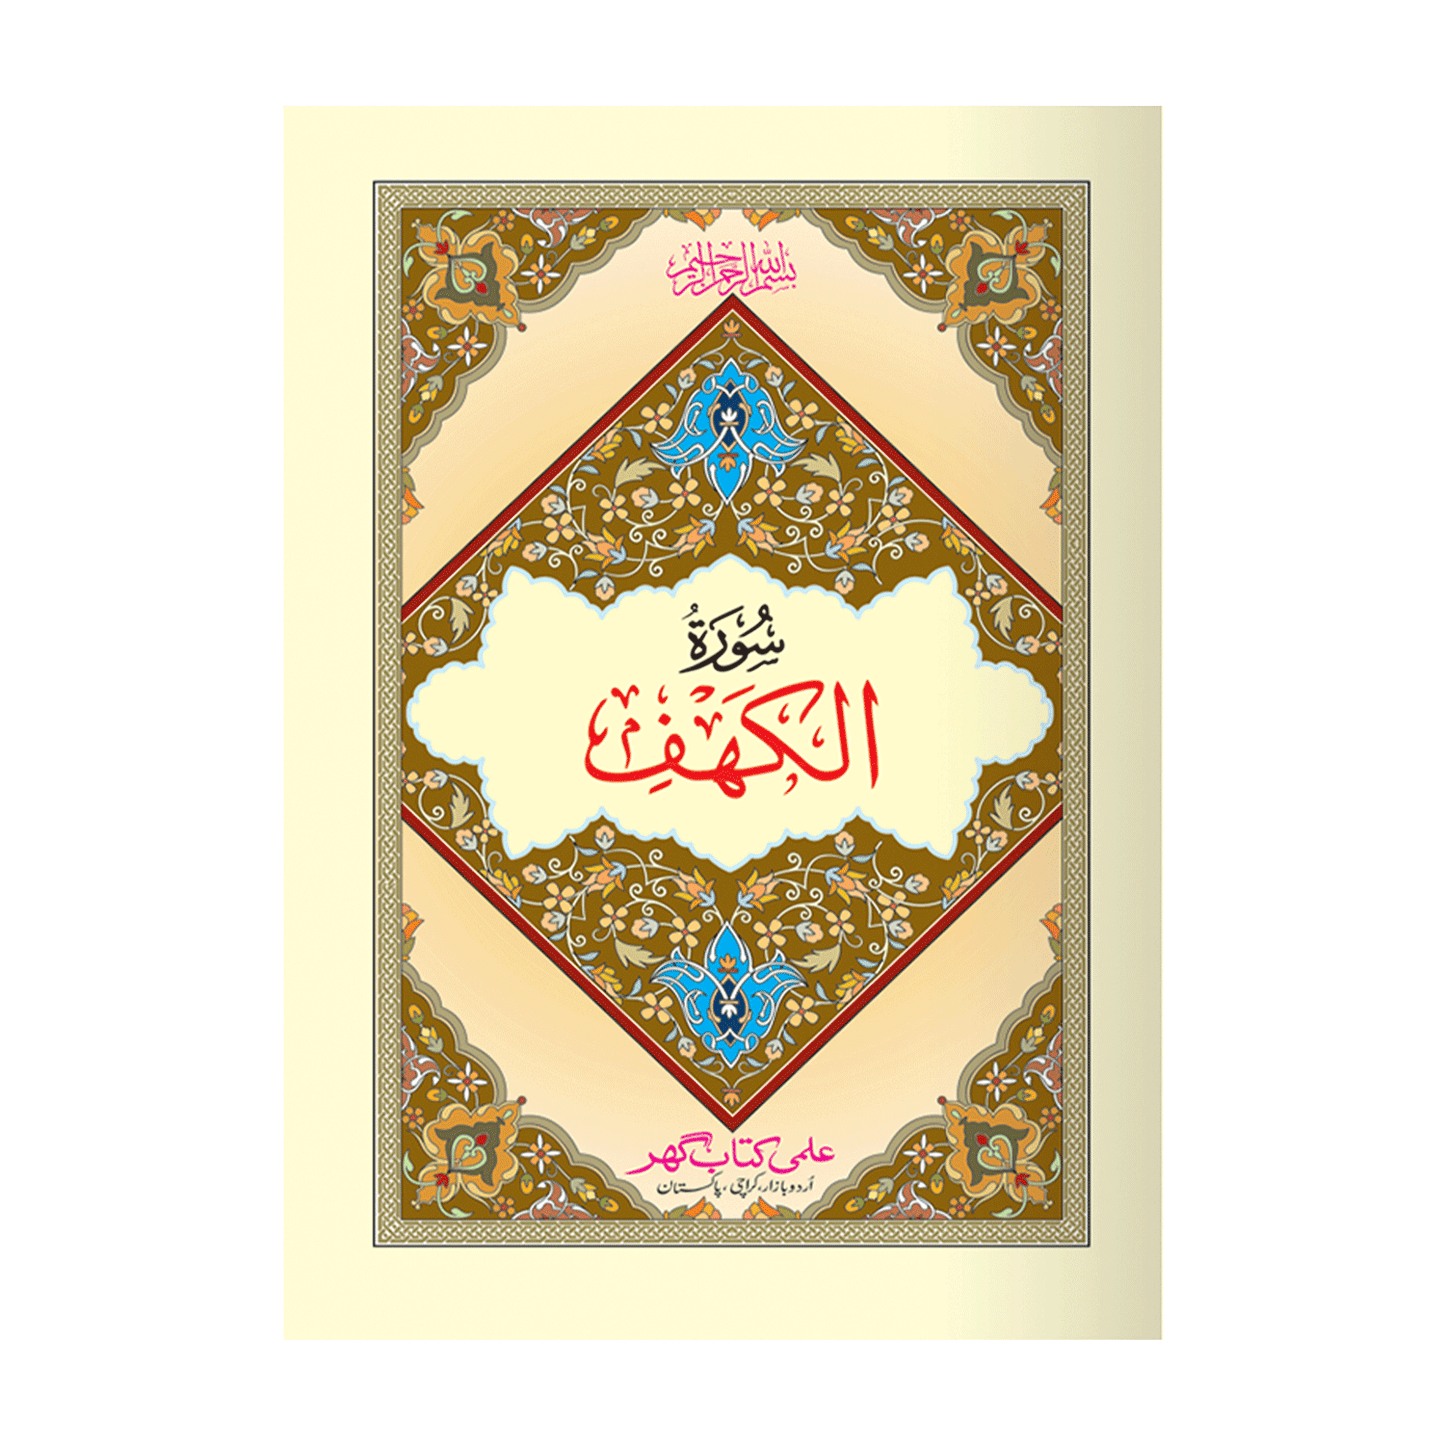 Surah Al-Kahf (Without Translation)